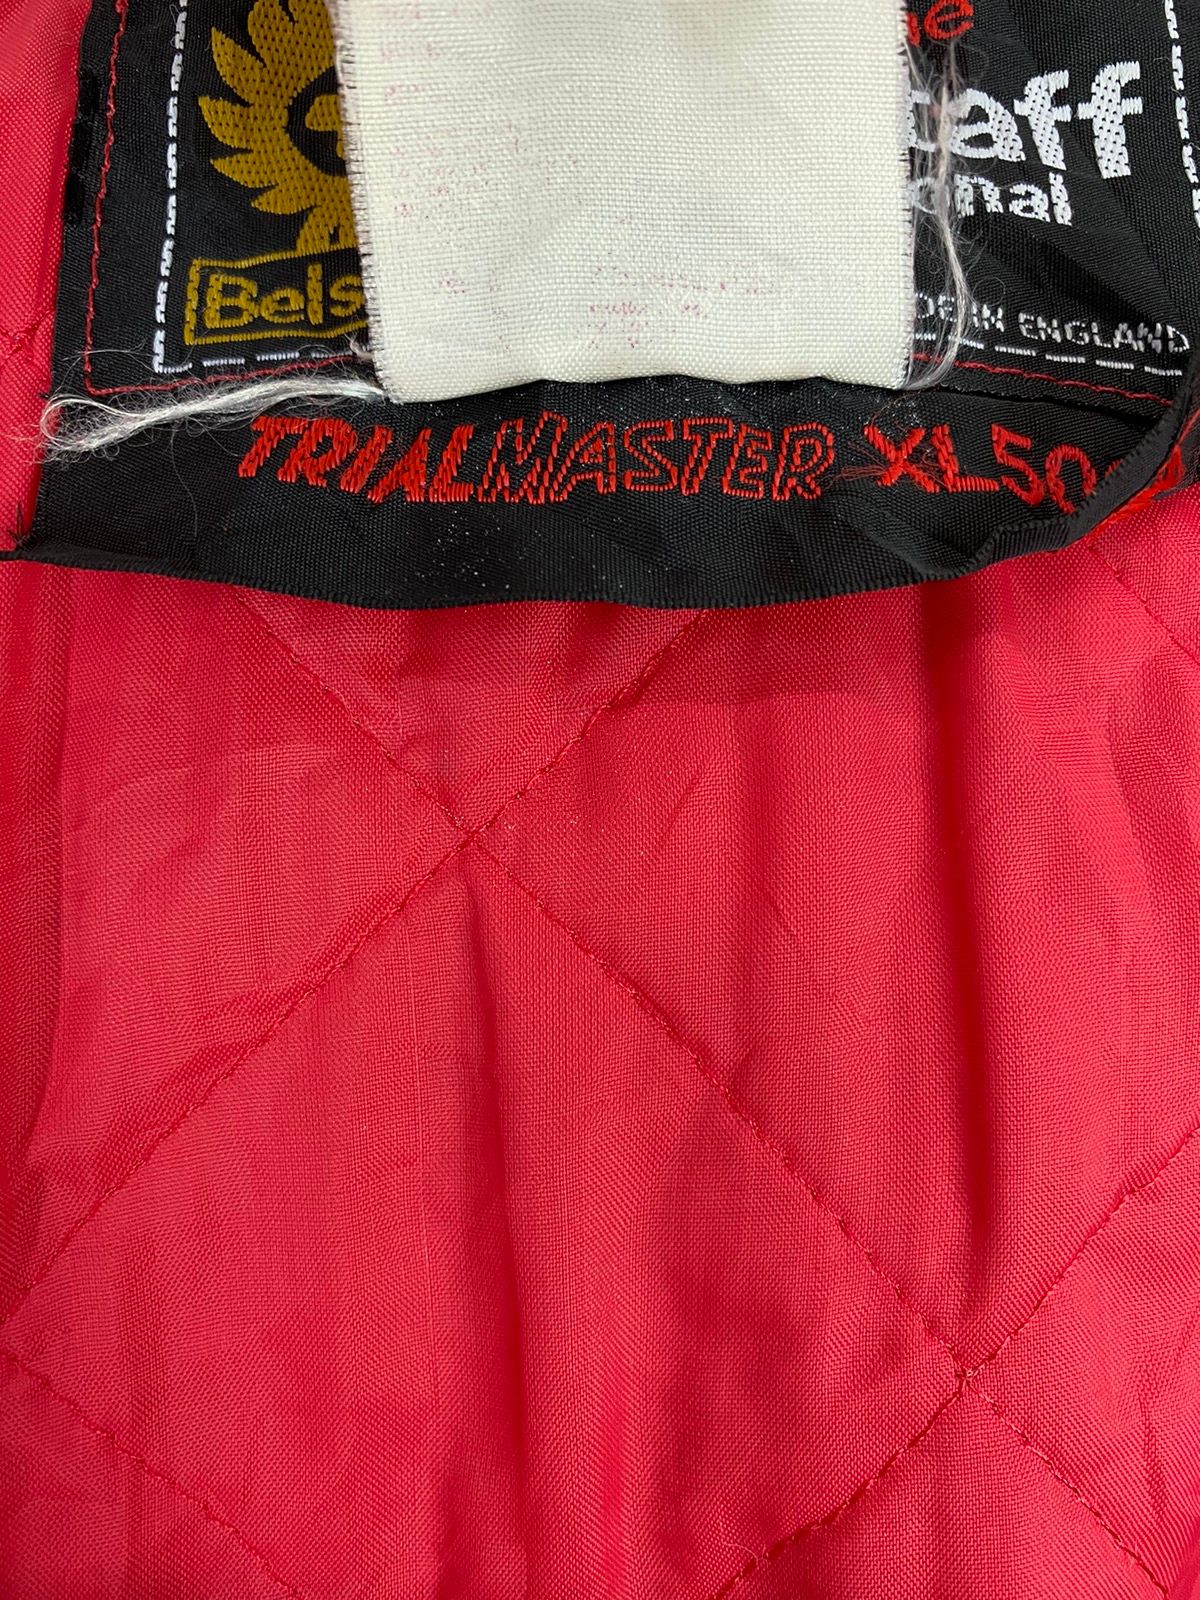 Rare! Belstaff LX500 International Made in England Jacket - 11